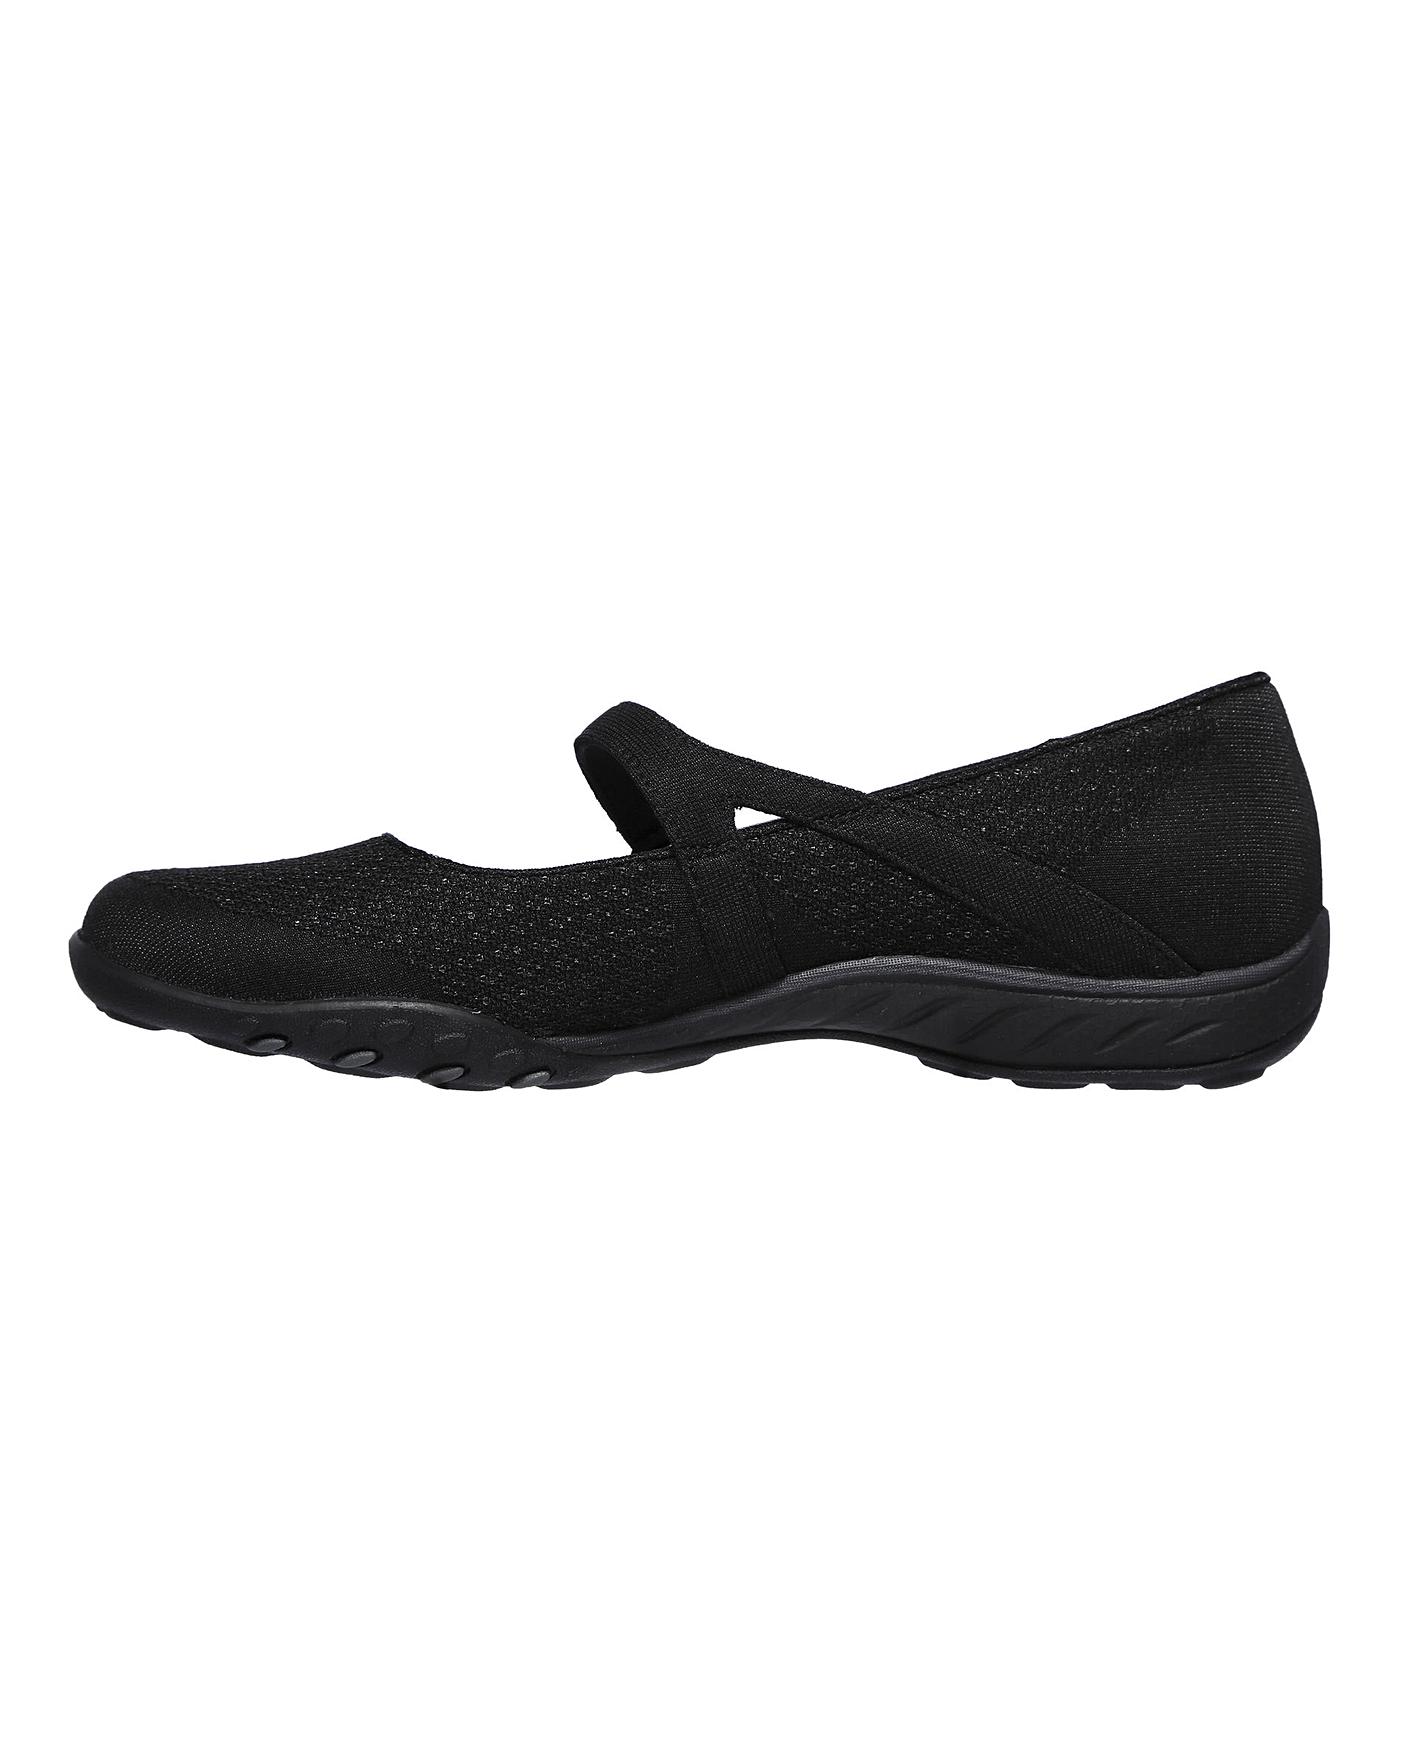 Skechers Slip on Leisure Shoes | J D 